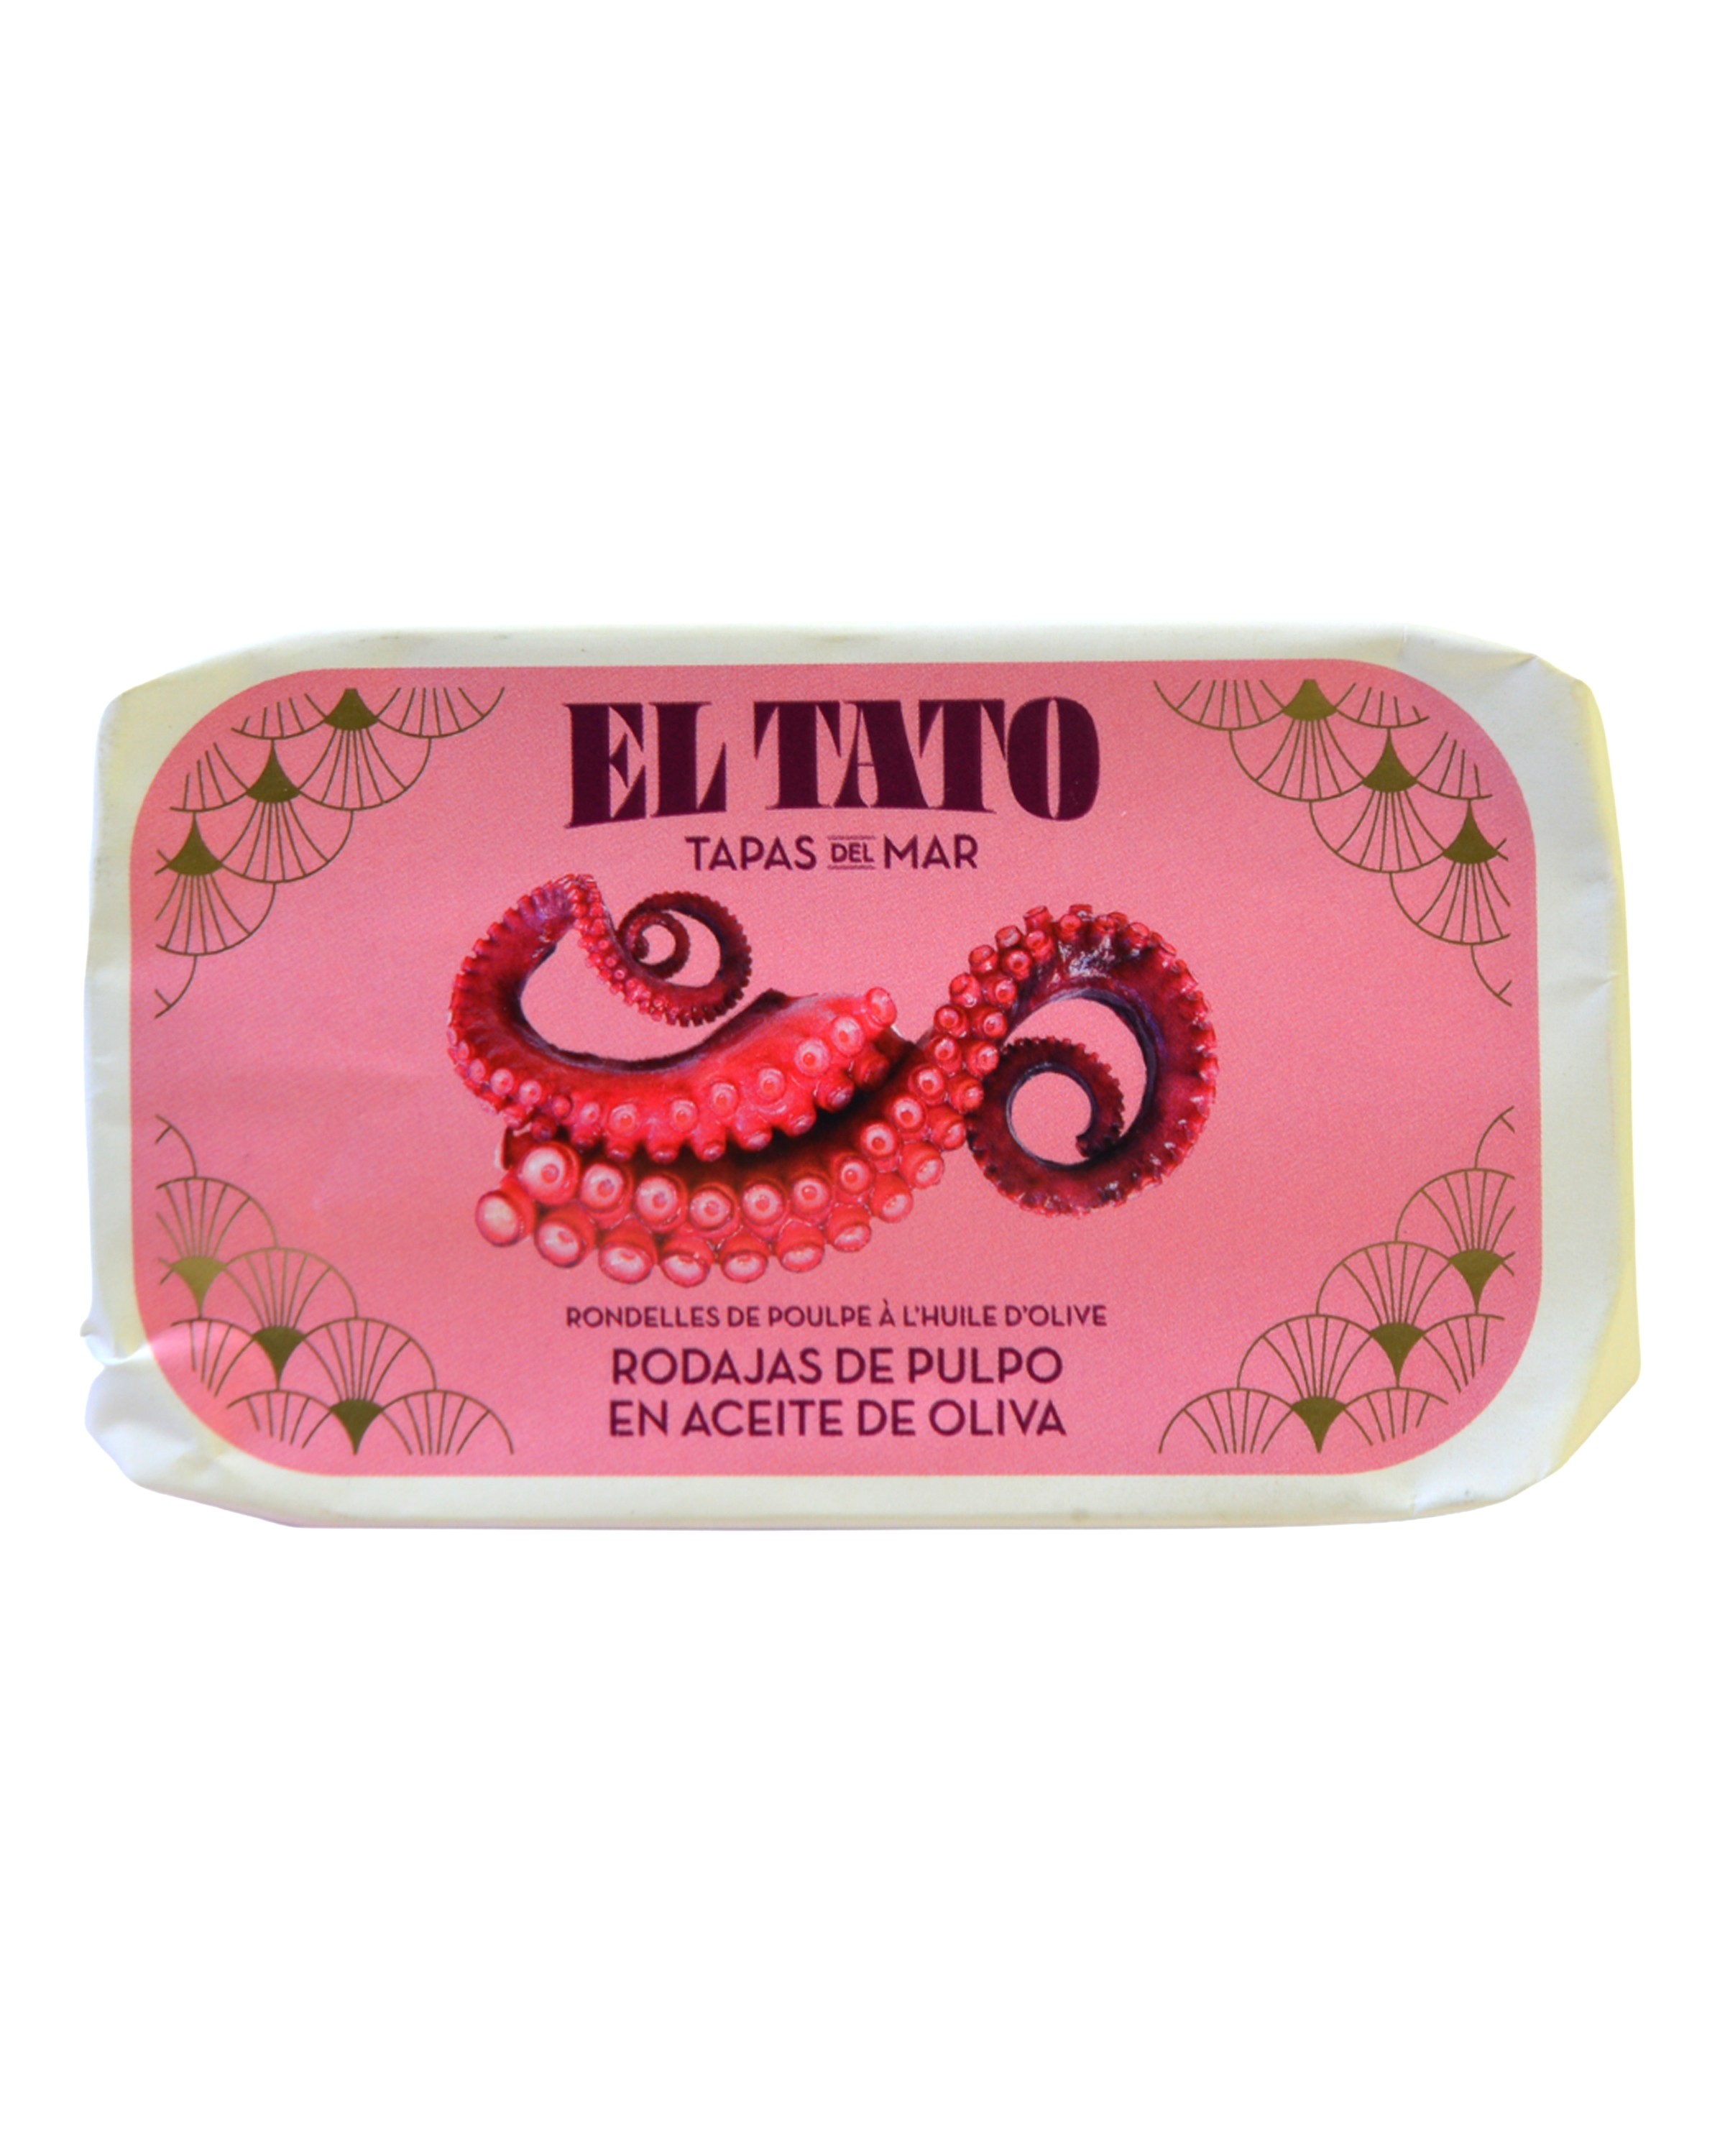 Sliced octopuses in olive oil  - Calle el Tato